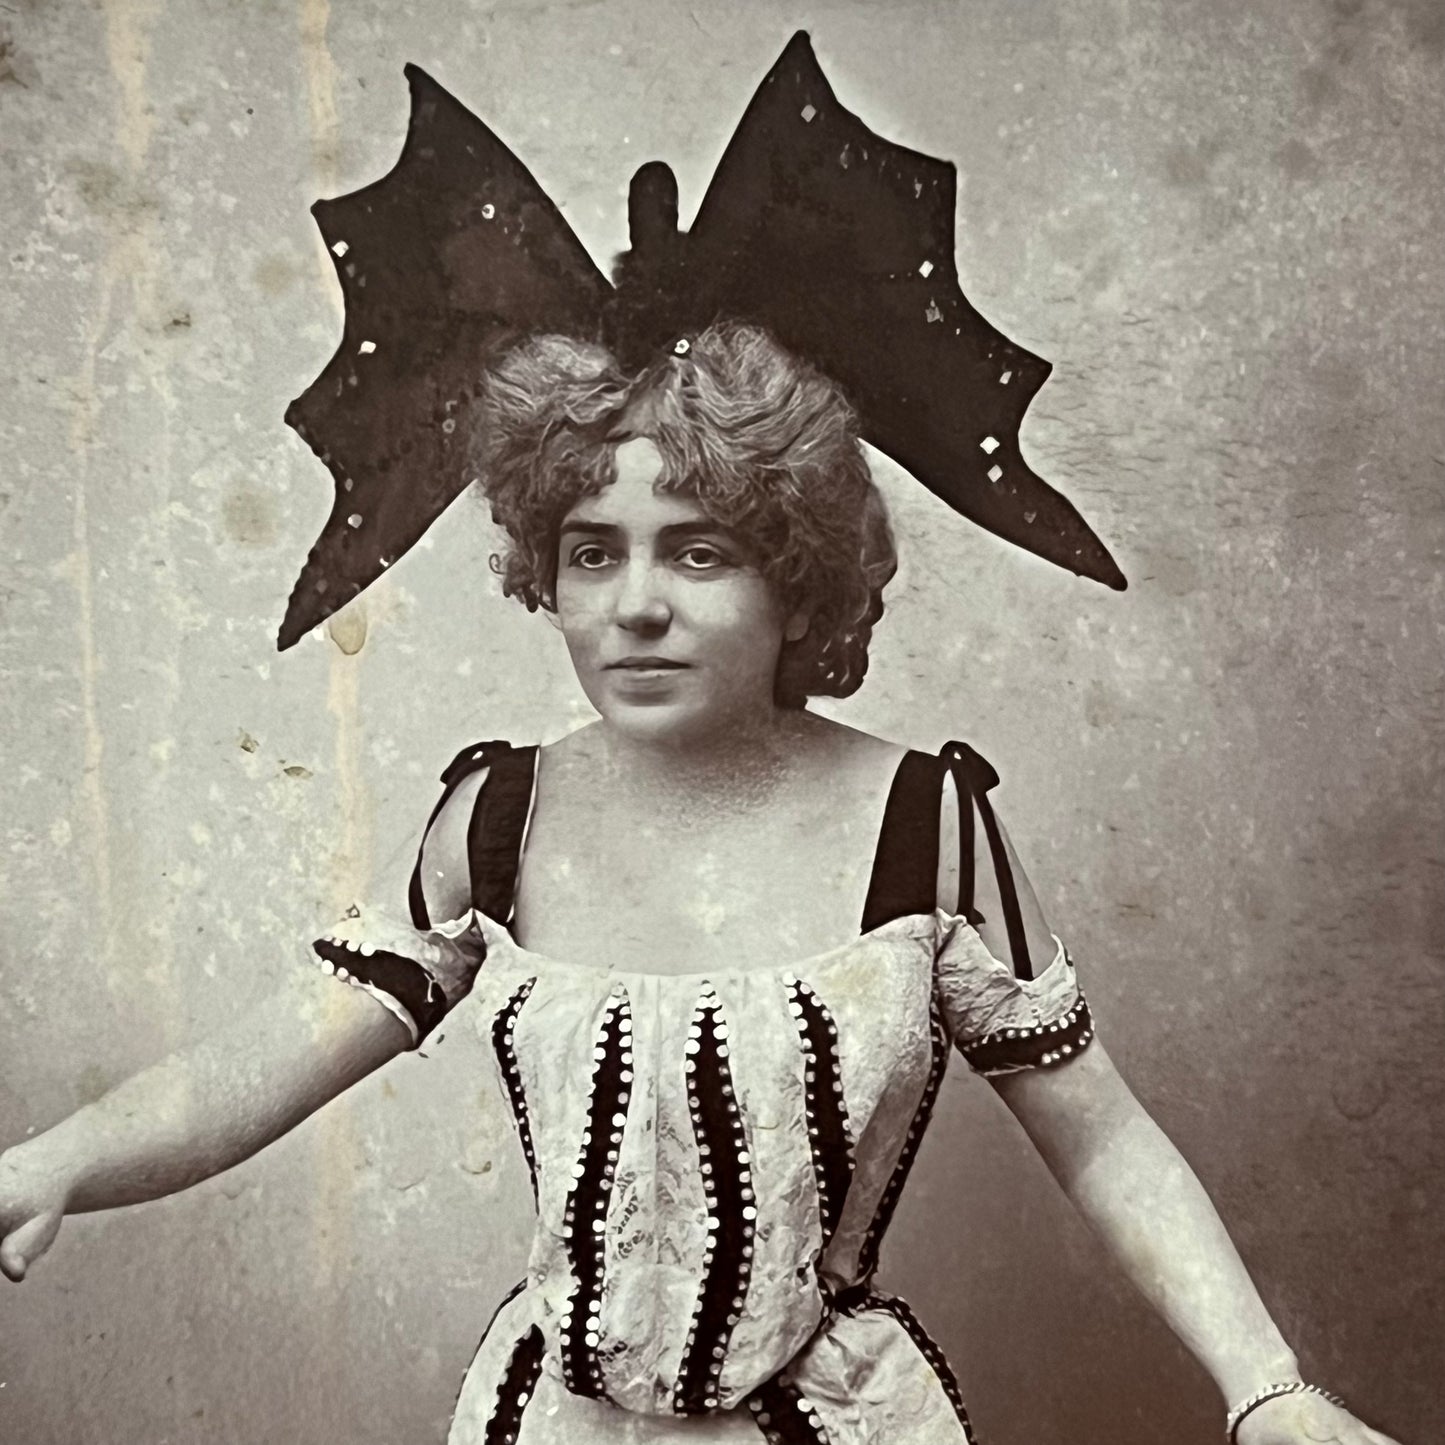 RESERVED Antique Cabinet Card Photograph Beautiful Woman Bat Hairpiece Devil Dress